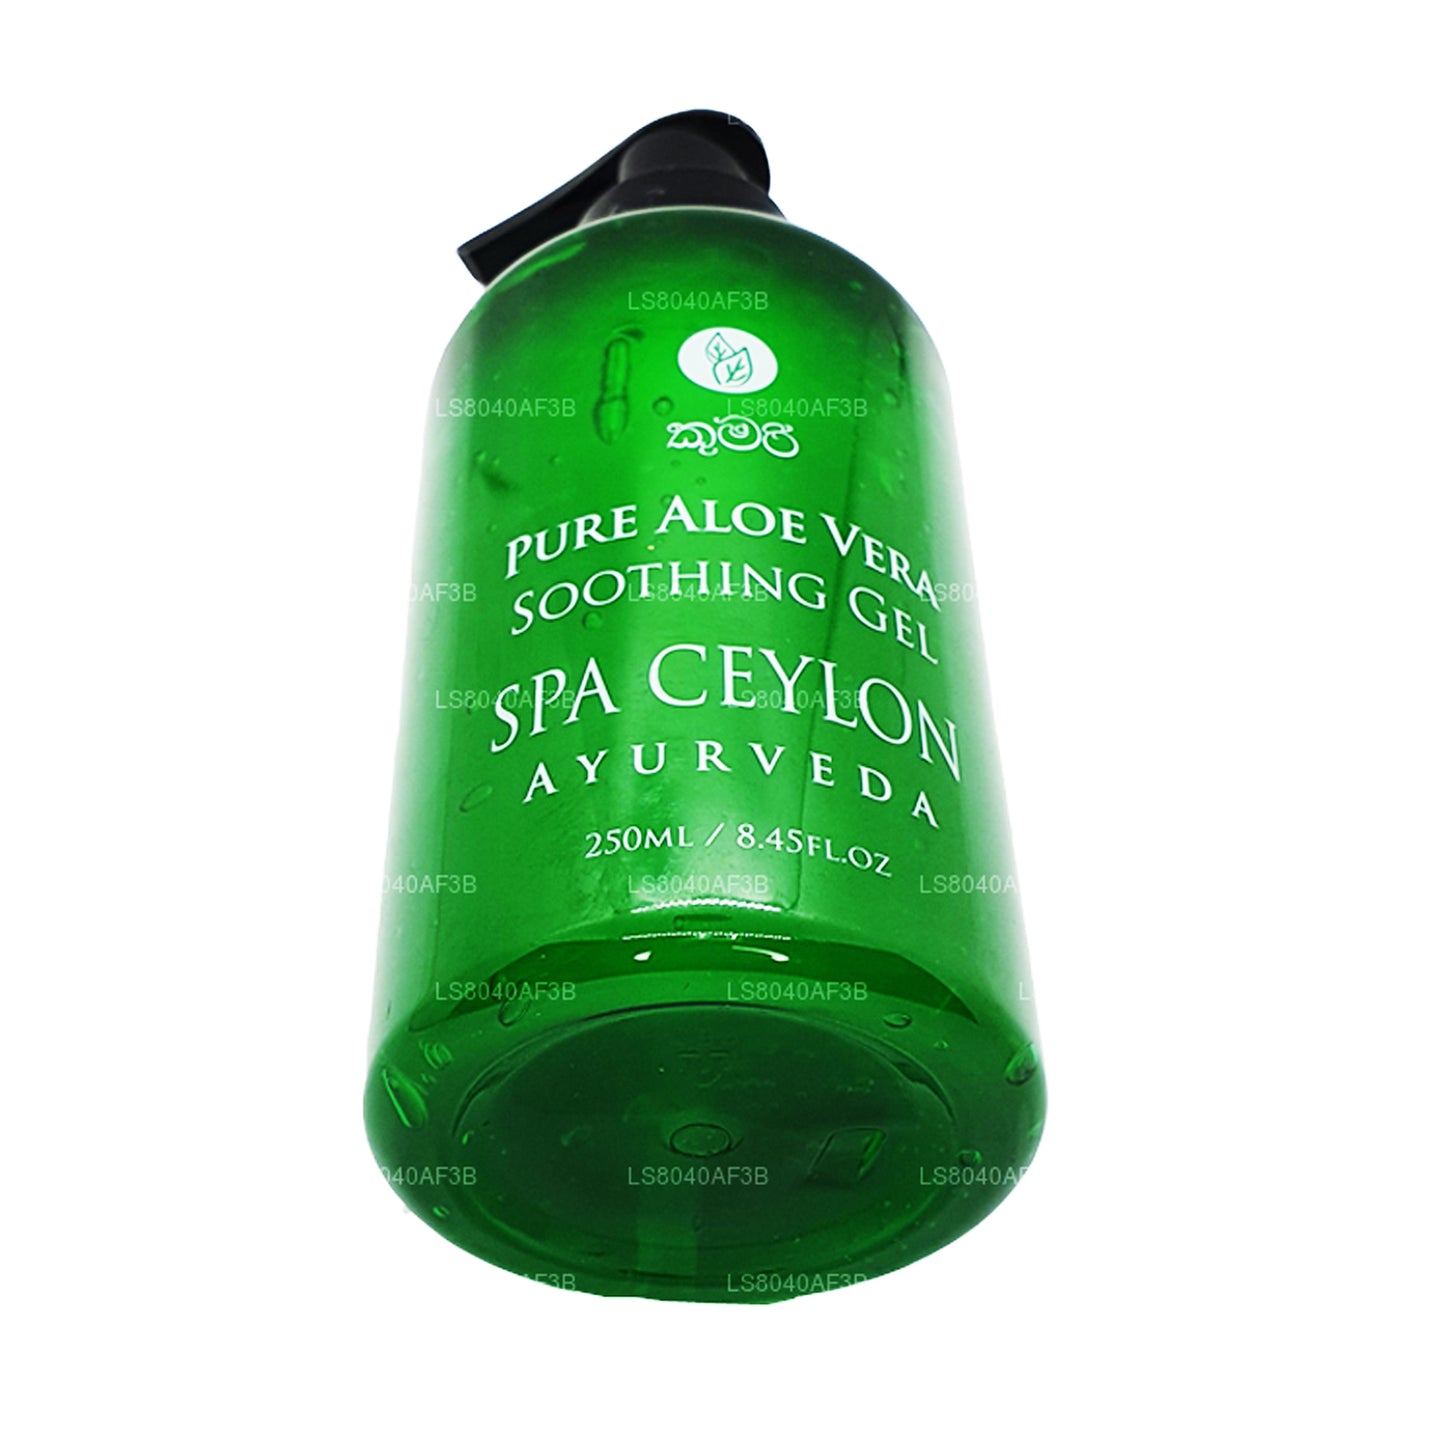 Spa Ceylon Pure Aloe Soothing Gel (250ml)